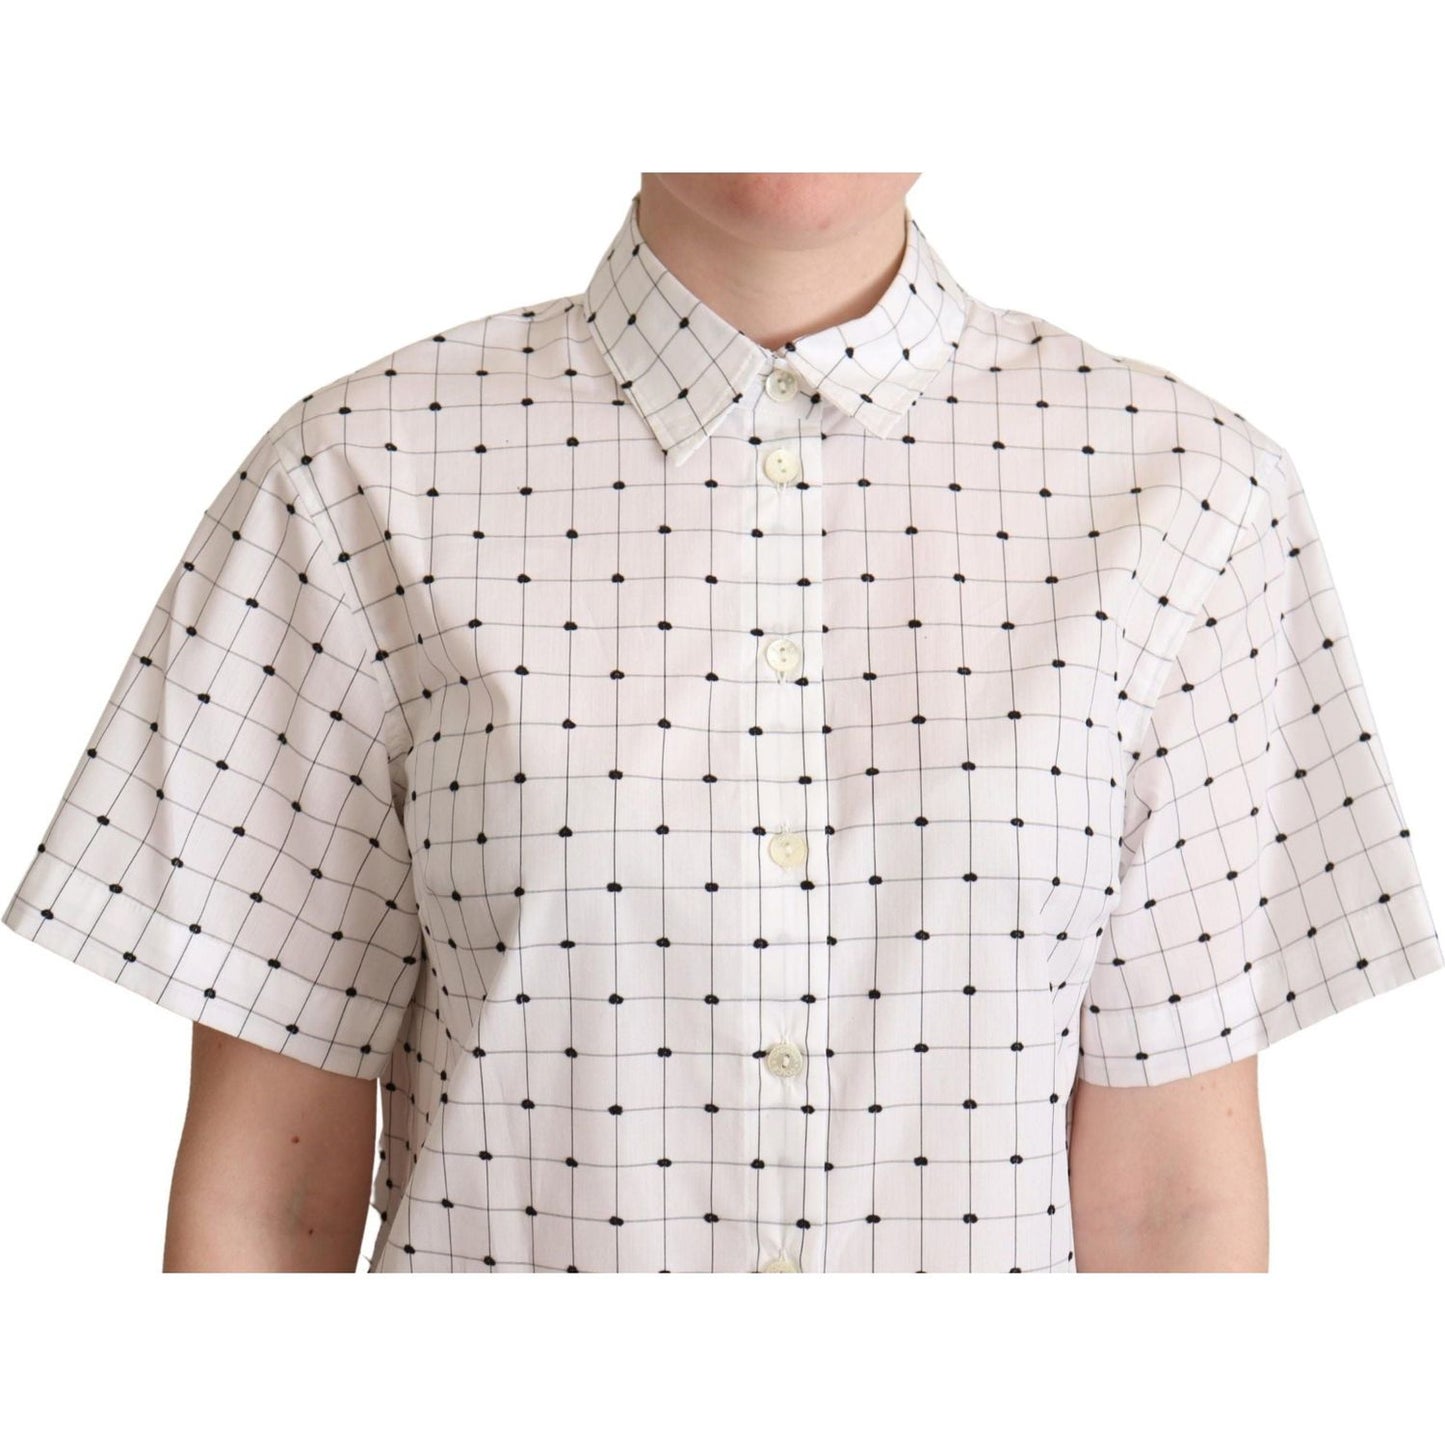 Dolce & Gabbana Chic Monochrome Polka Dot Polo Top Blouse Top white-polka-dot-cotton-collared-shirt-top